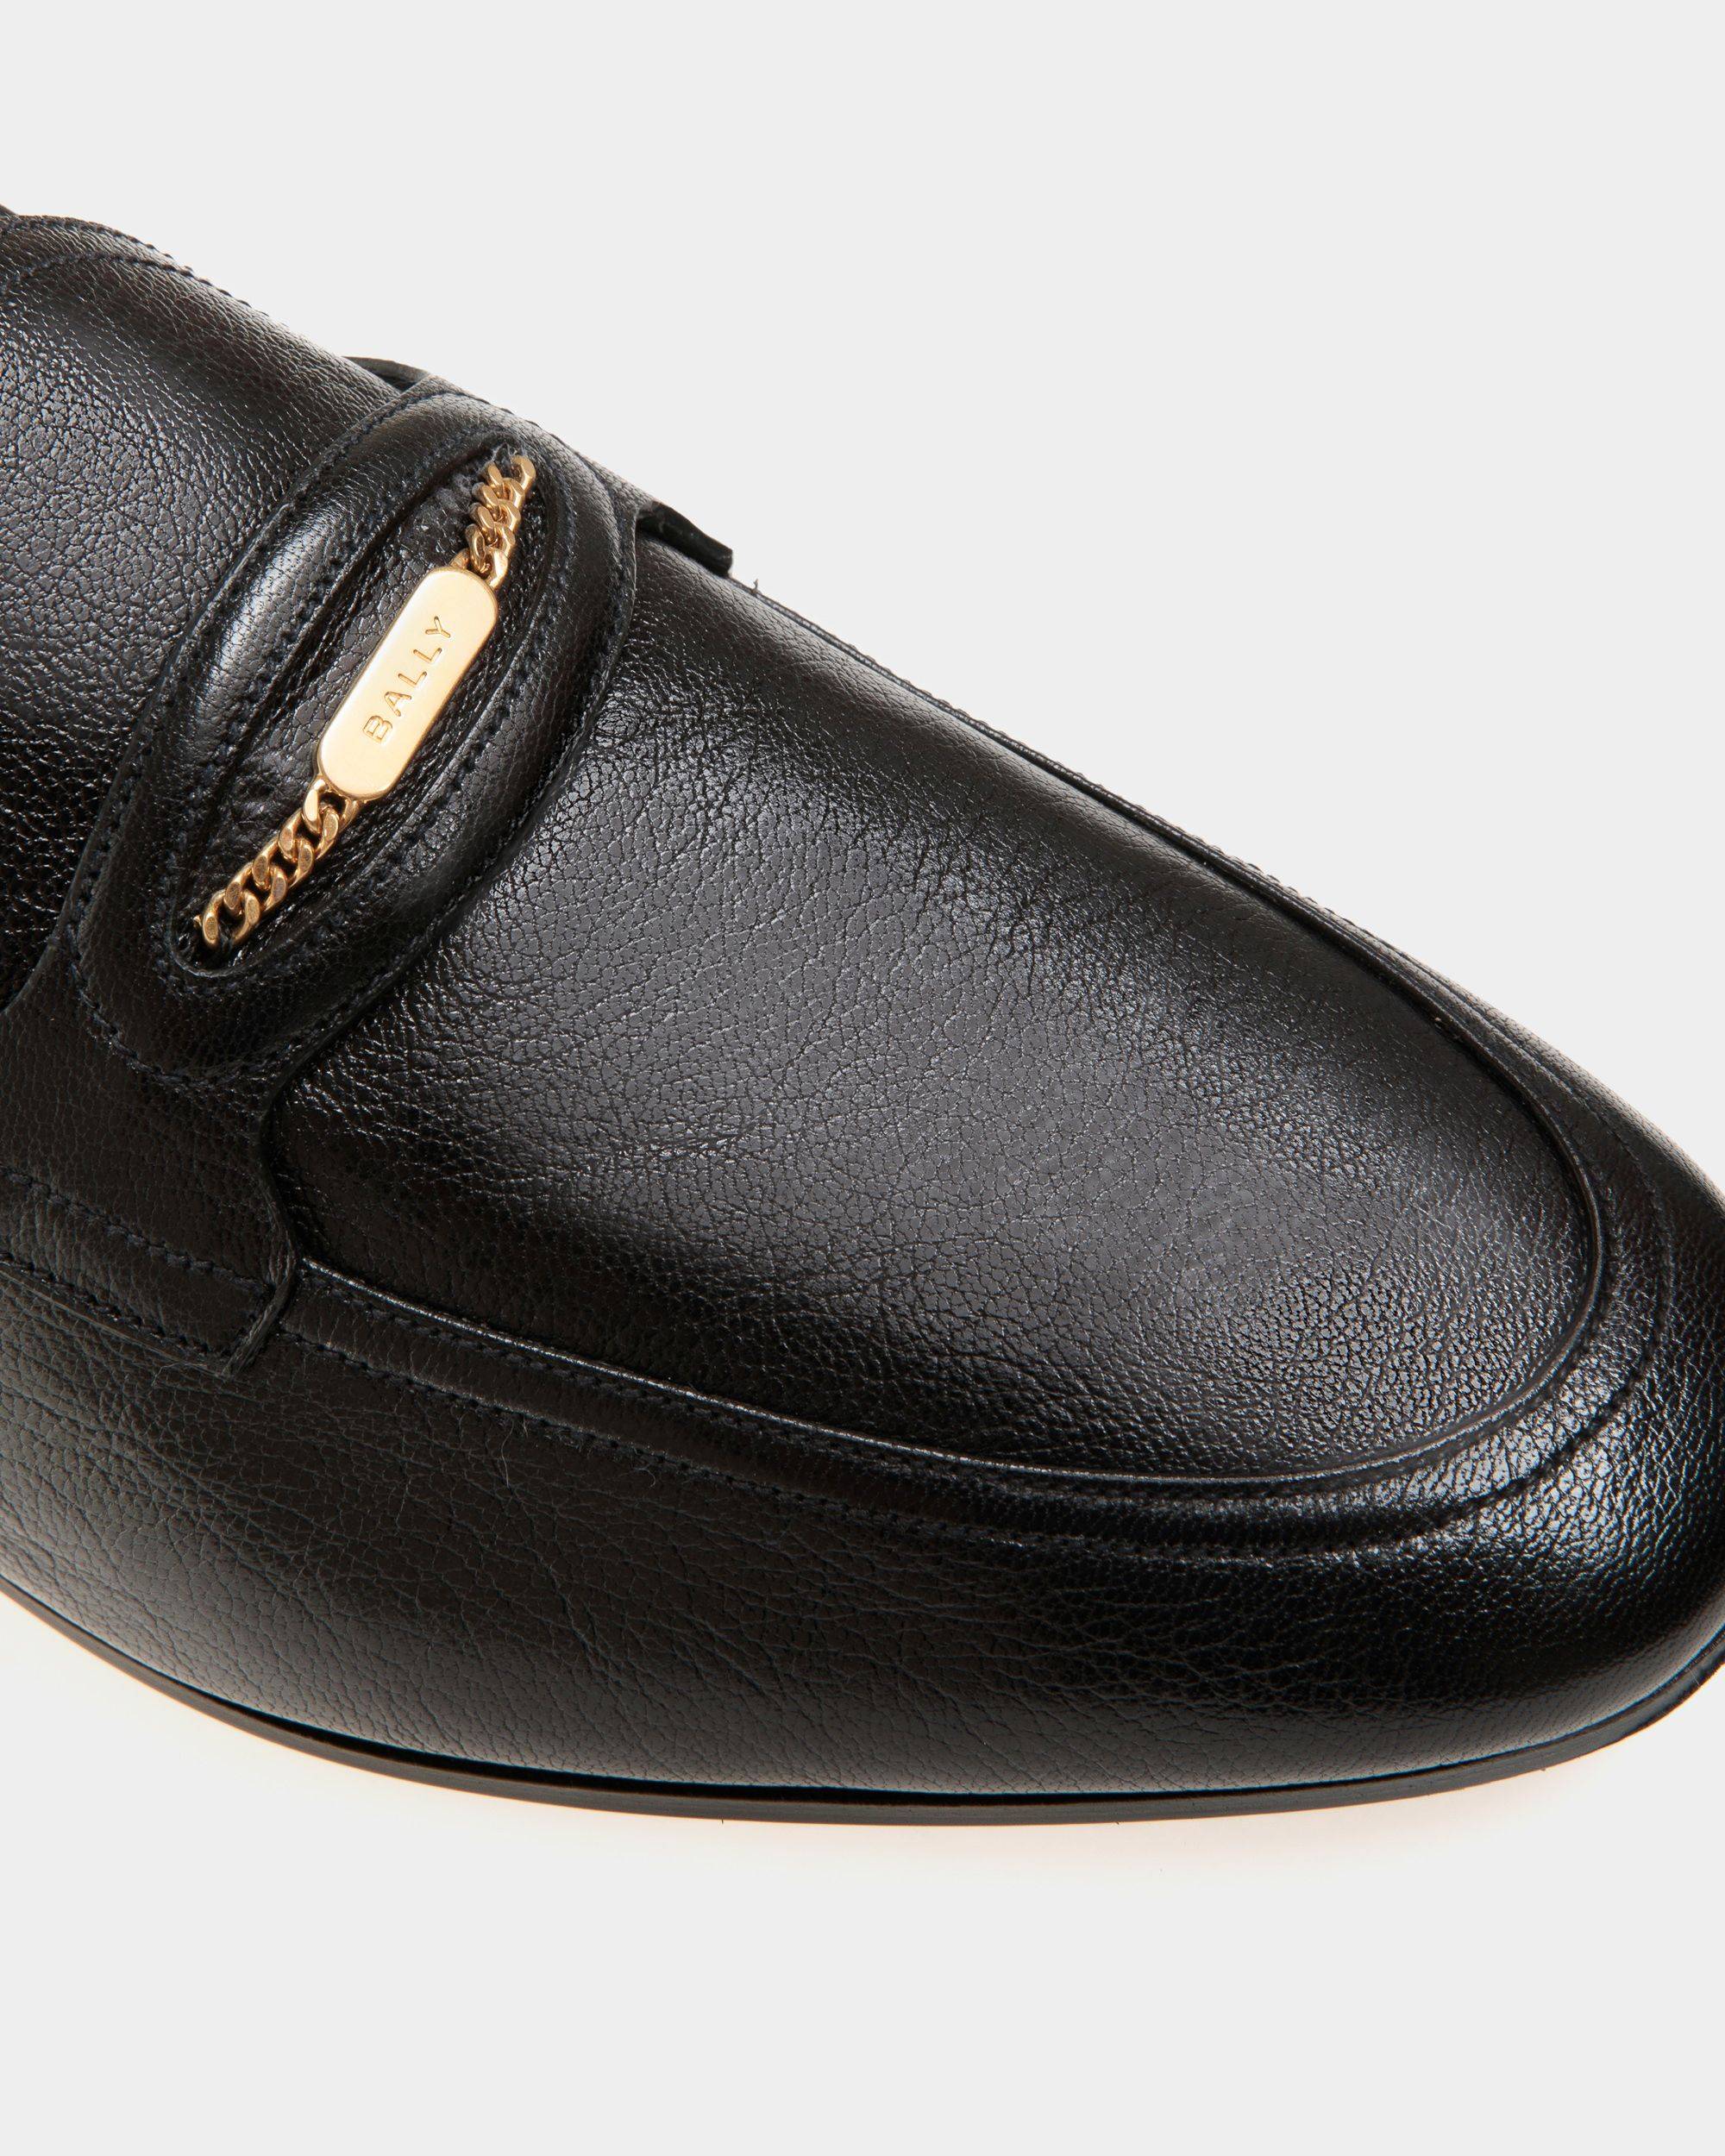 Plume | Men's Loafer in Black Grained Leather | Bally | Still Life Detail